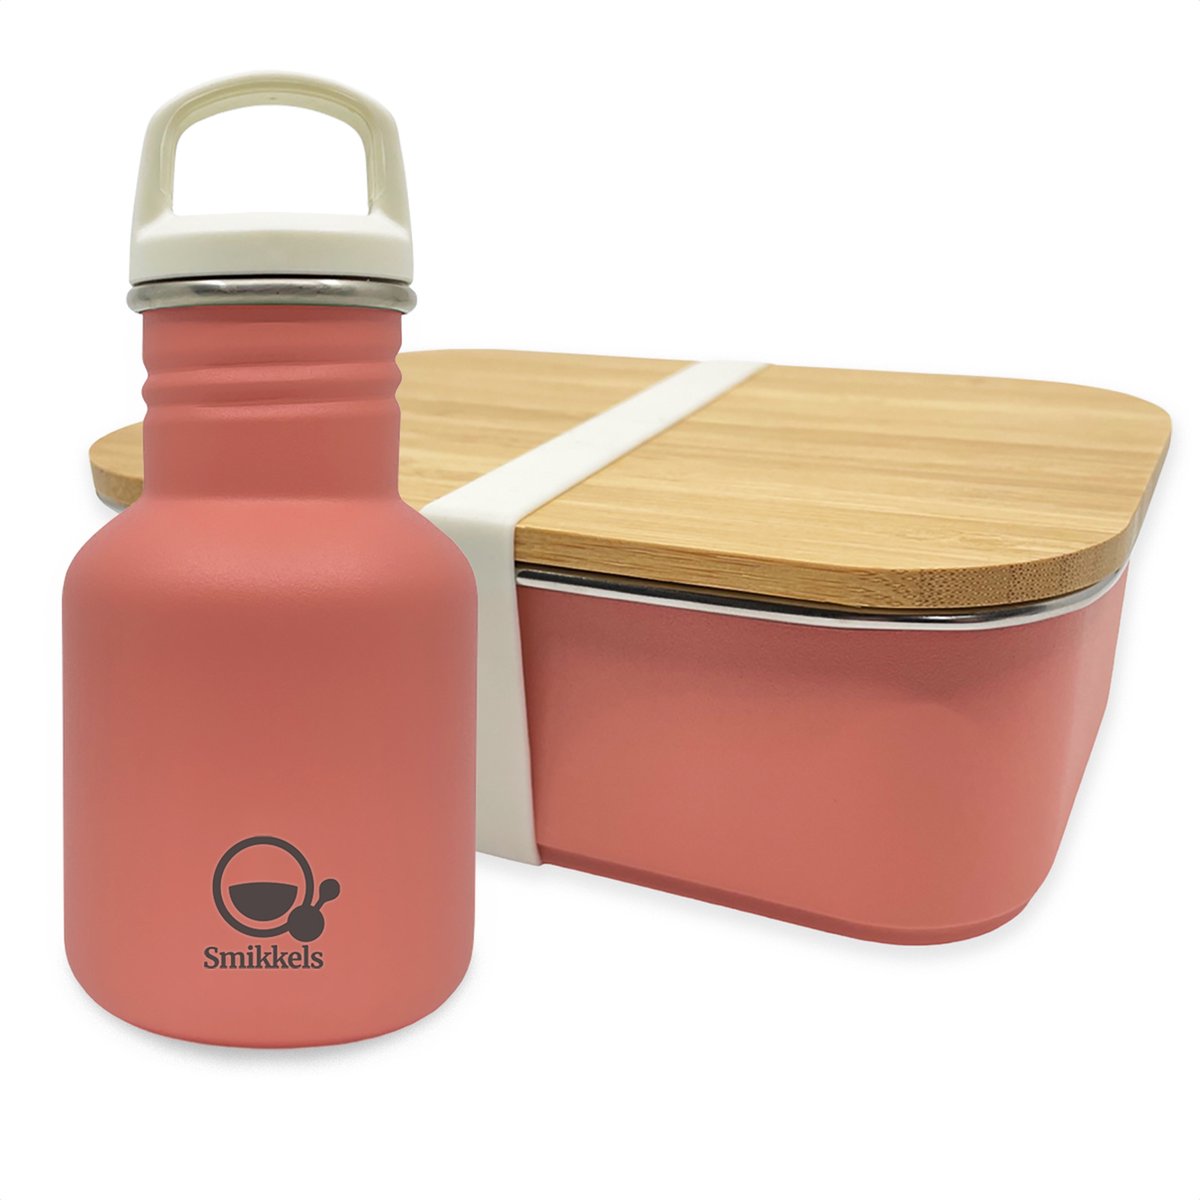 Smikkels - Schoolset RVS lunchbox met drinkfles kind - Roze - Duurzaam - Afsluitdop en rietjesdop - Lunchset Broodtrommel en Schoolbeker - Basisschool